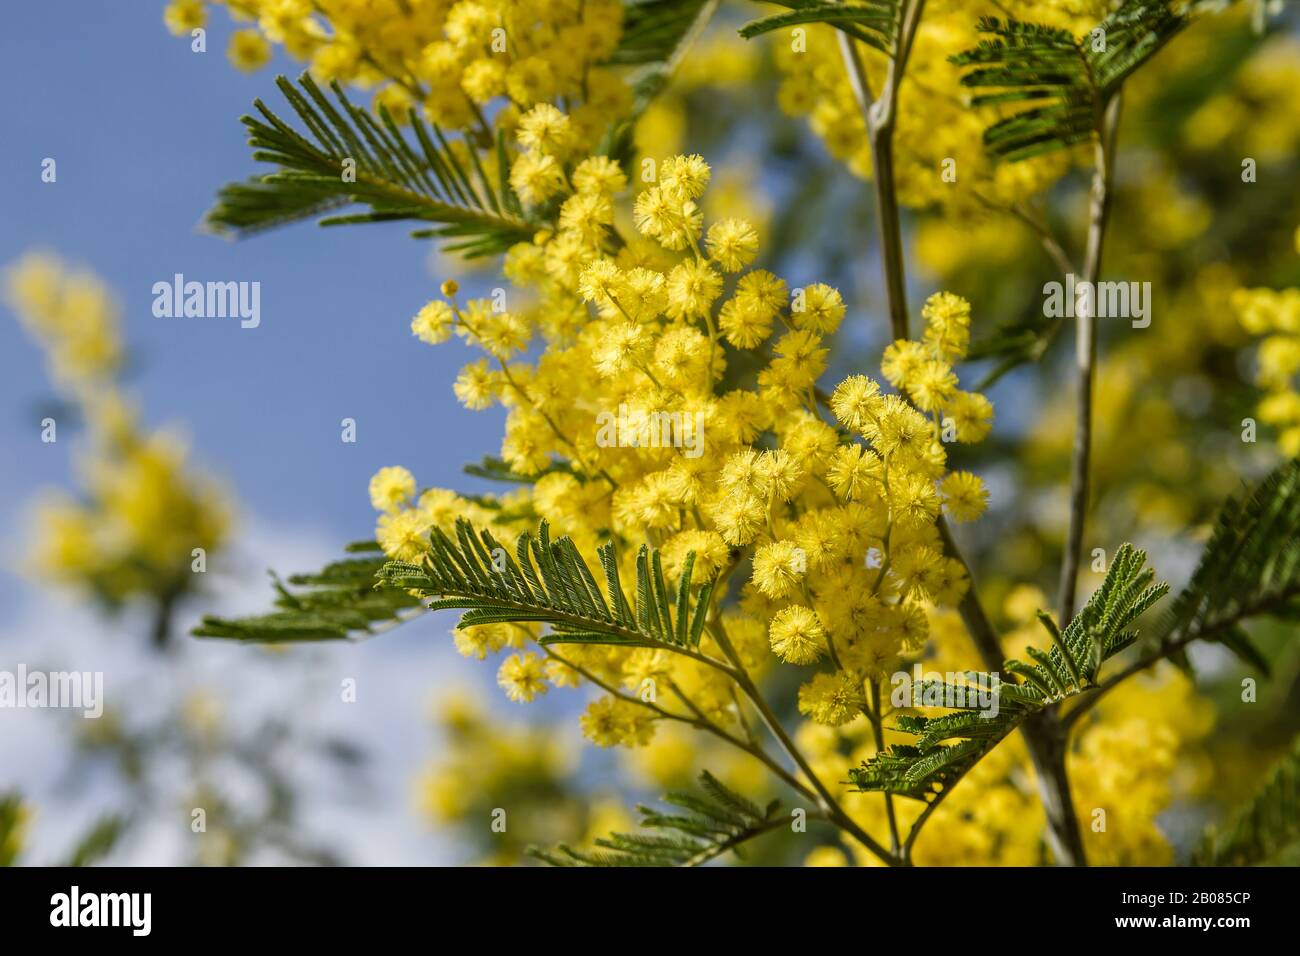 Detail of Acacia dealbata yellow flowers blooming Stock Photo